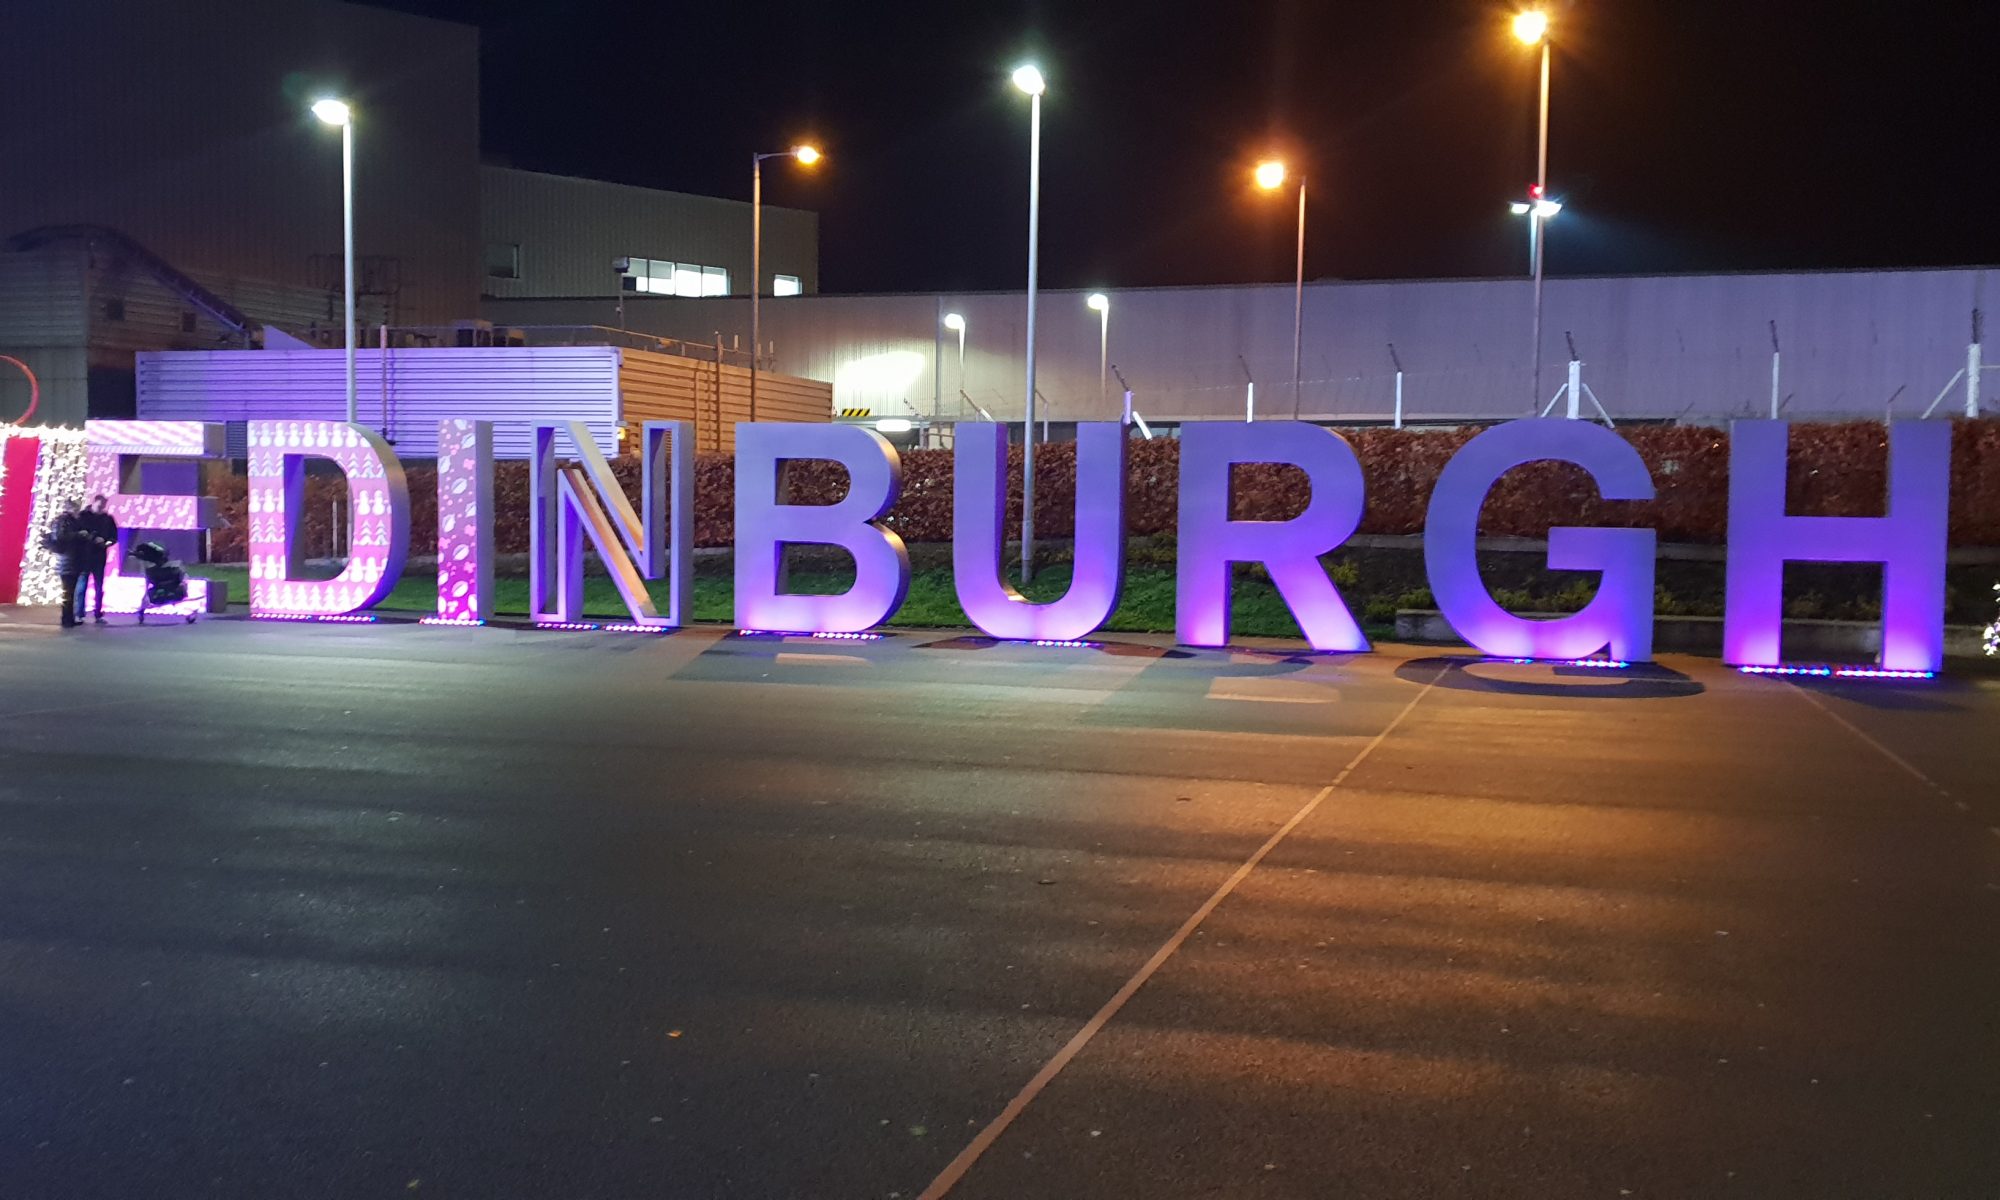 Edinburgh Airport sign next to tram stop